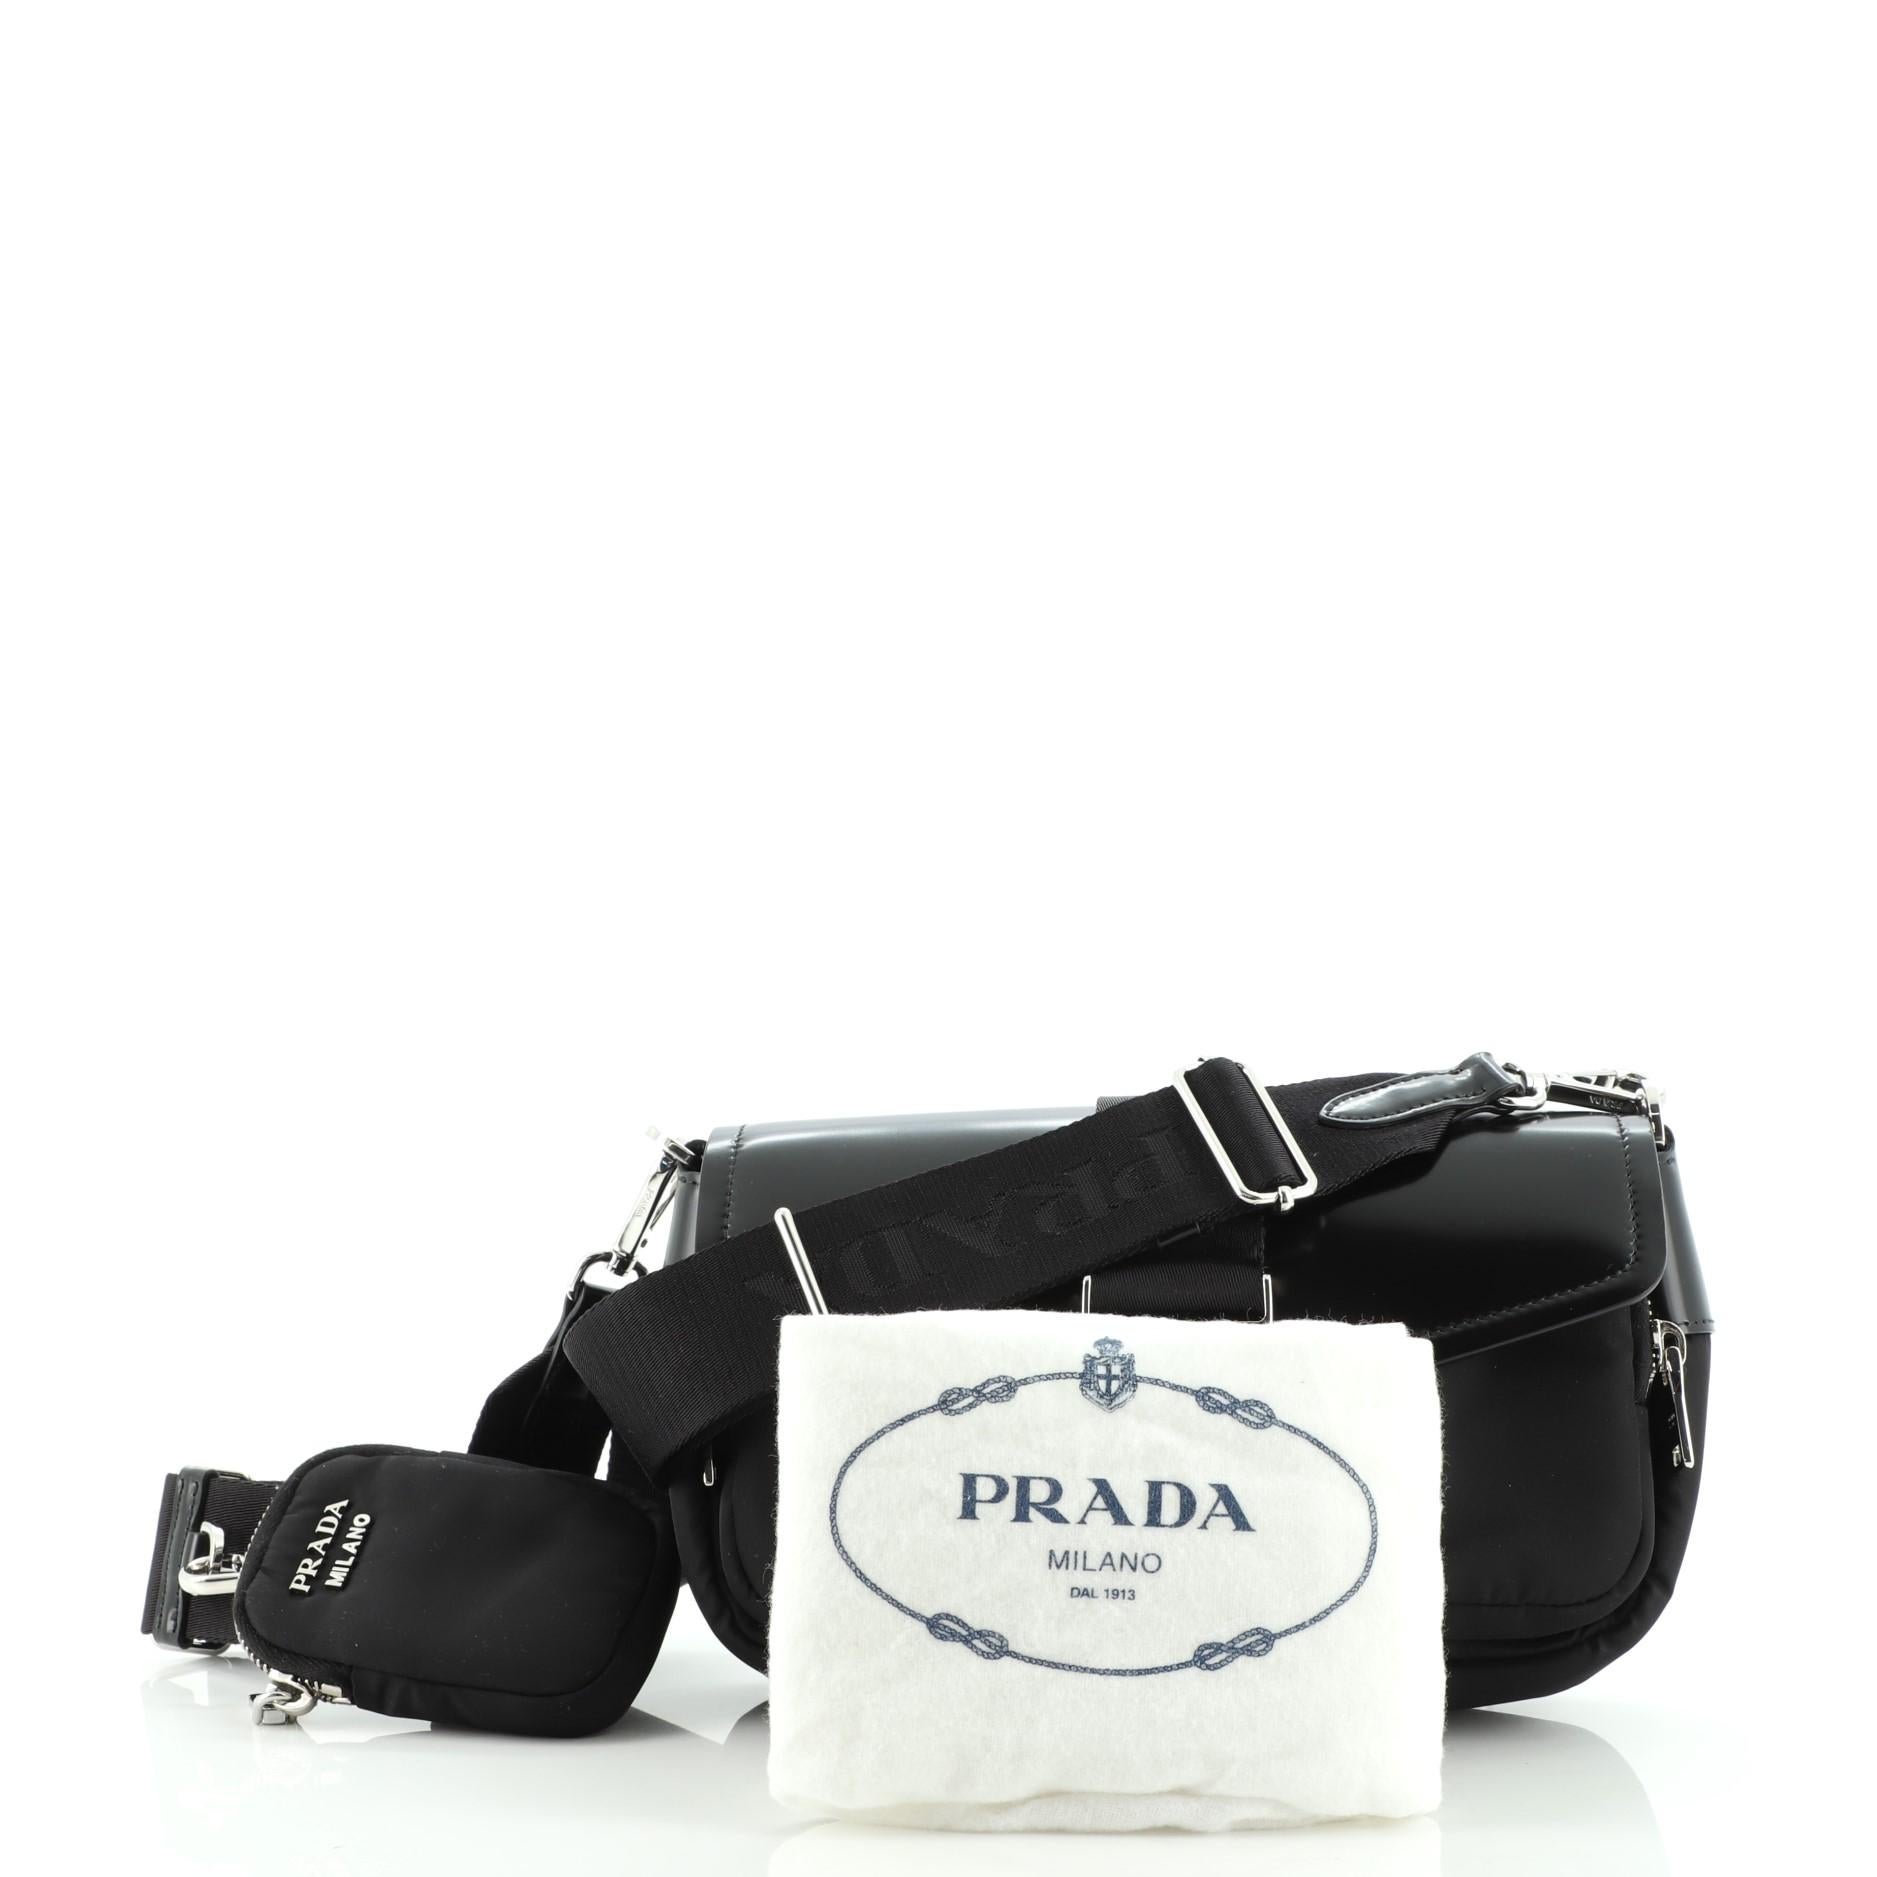 Prada Re Nylon - 8 For Sale on 1stDibs